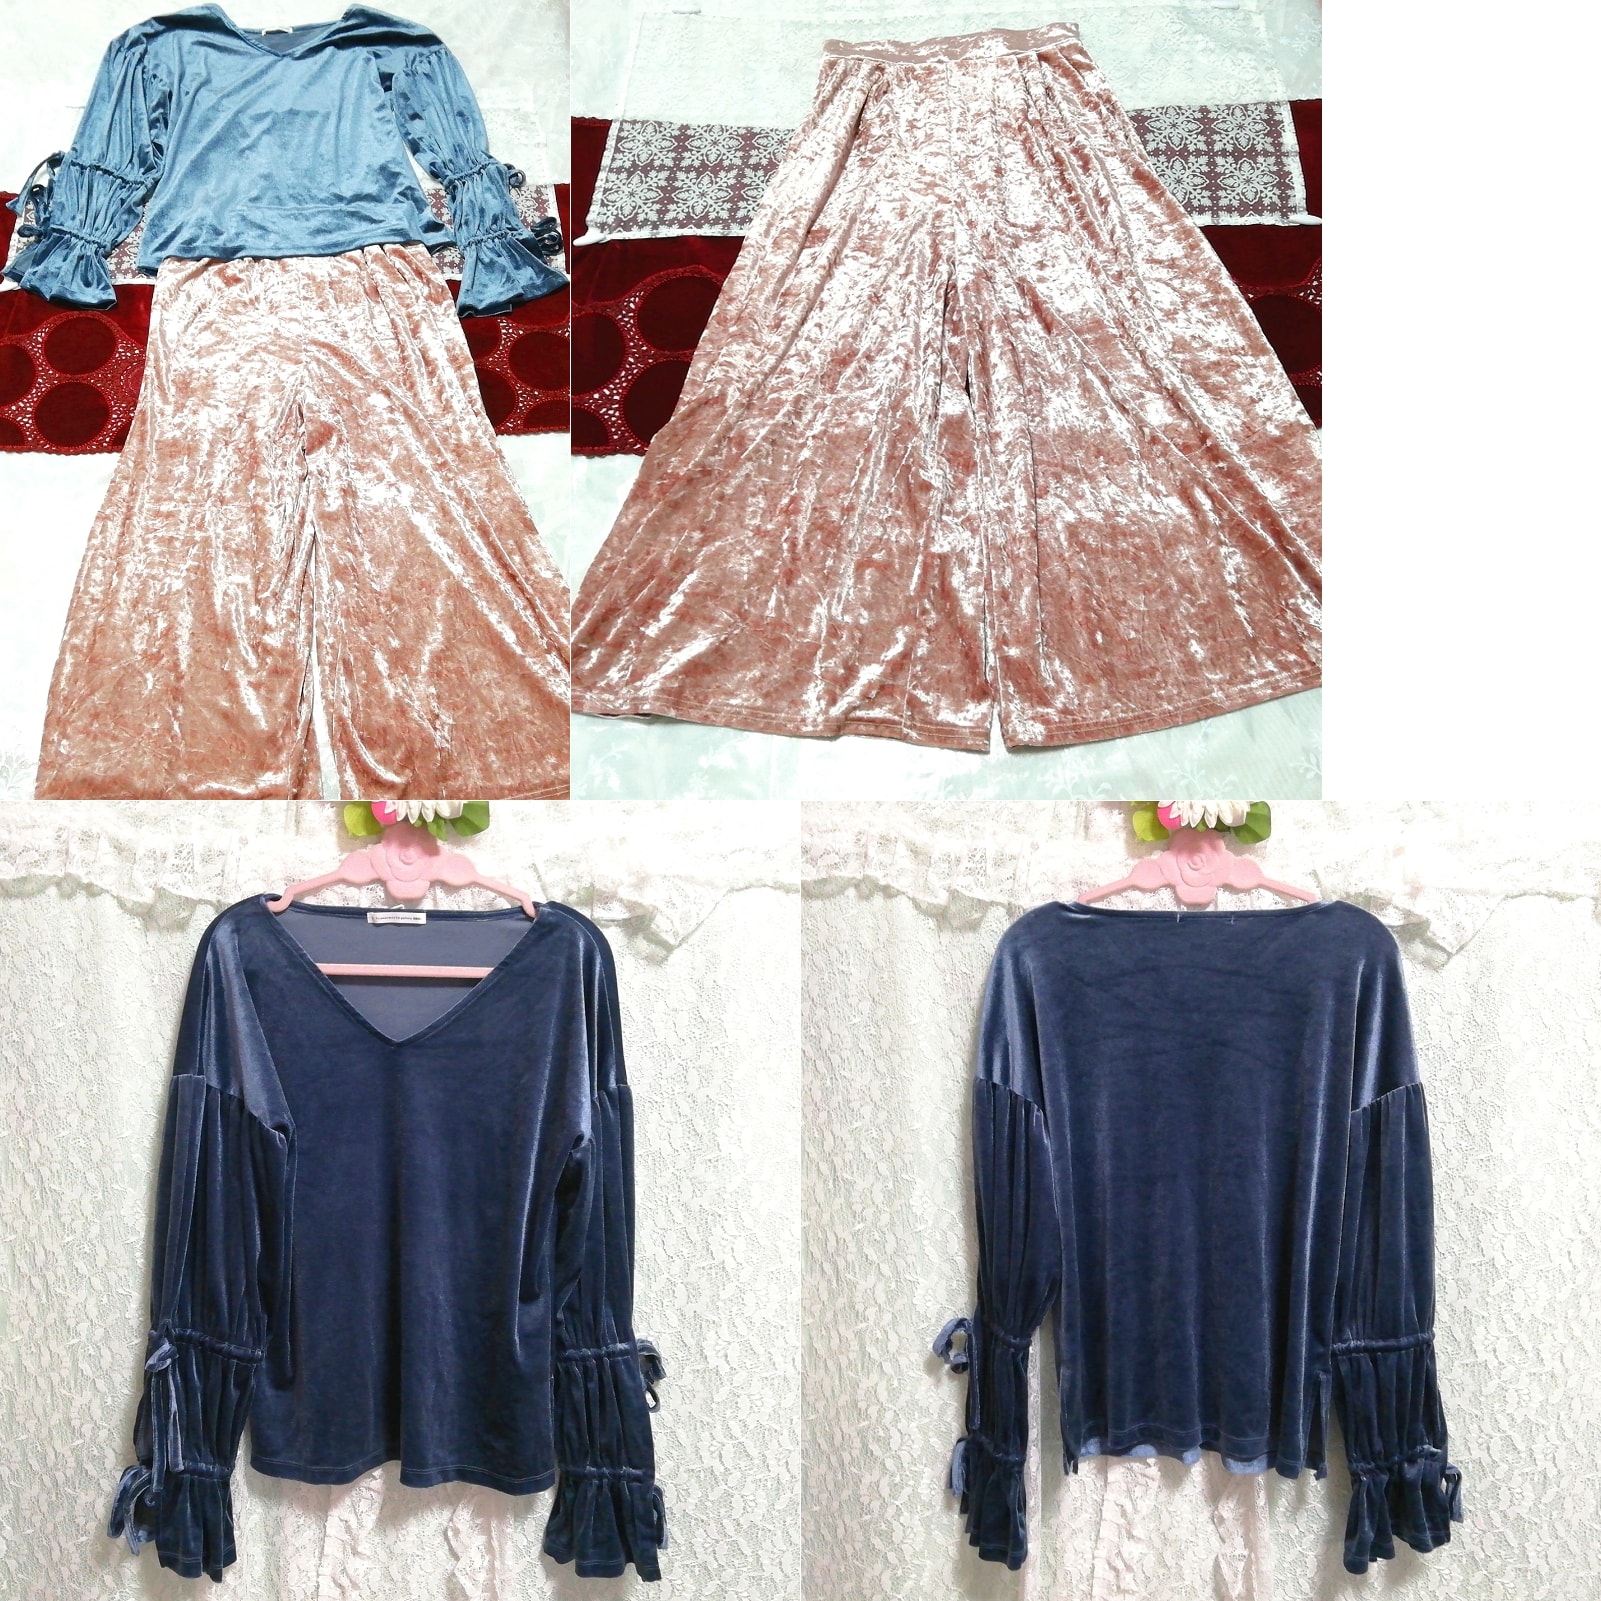 Marineblaue Velours-Tunika, Negligé-Nachthemd, rosa Velours-Maxirock, 2 Stück, Mode, Frauenmode, Nachtwäsche, Pyjama